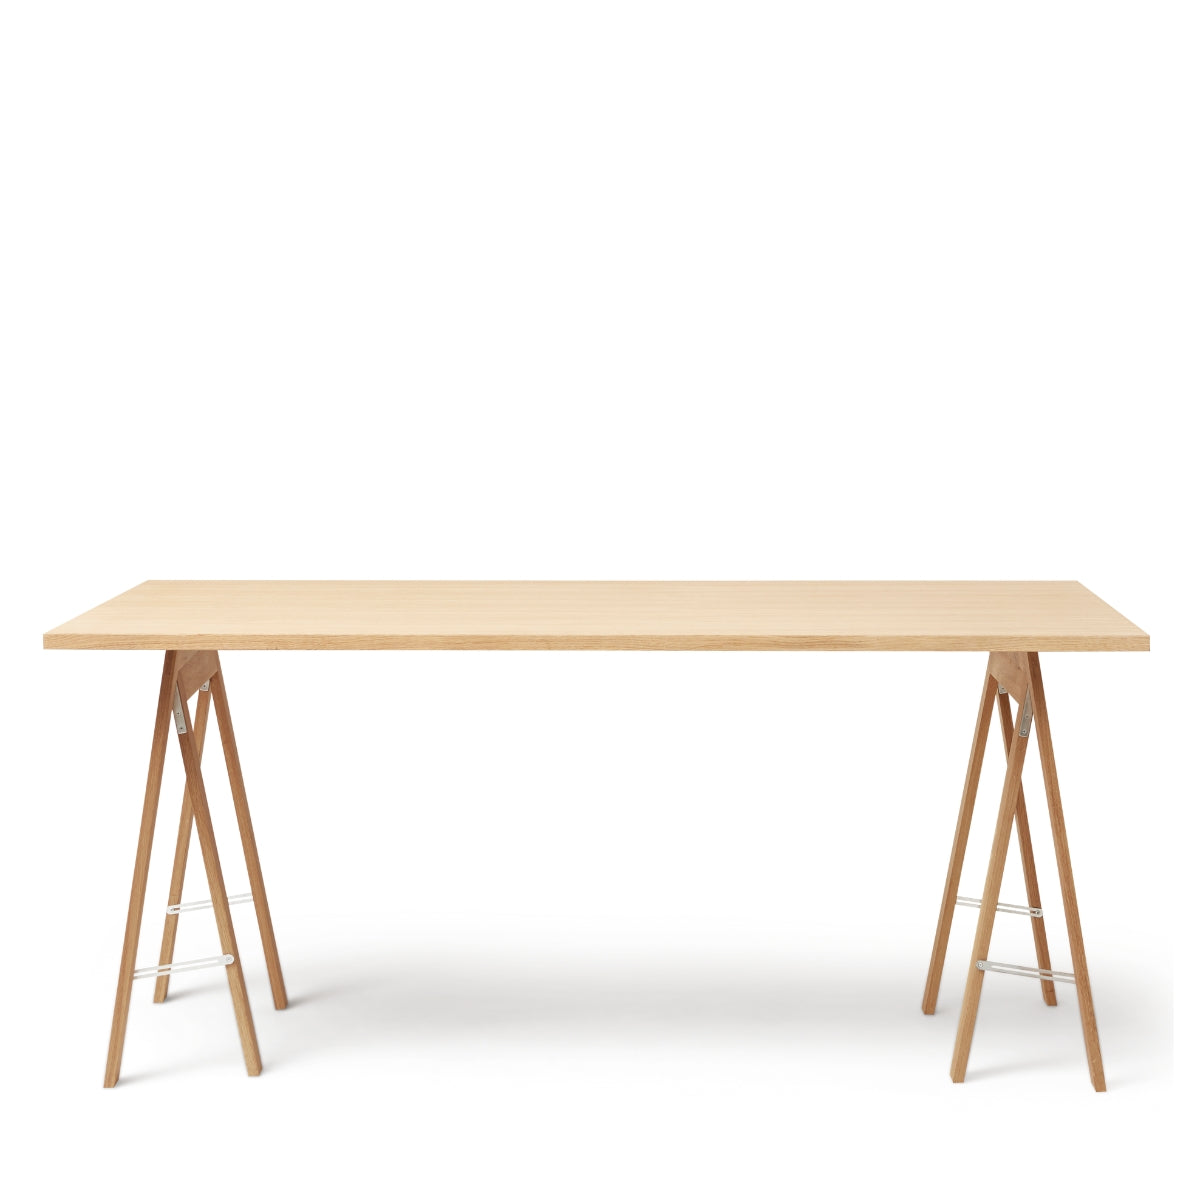 Form & Refine | Linear Tabletop - 165 x 88 cm